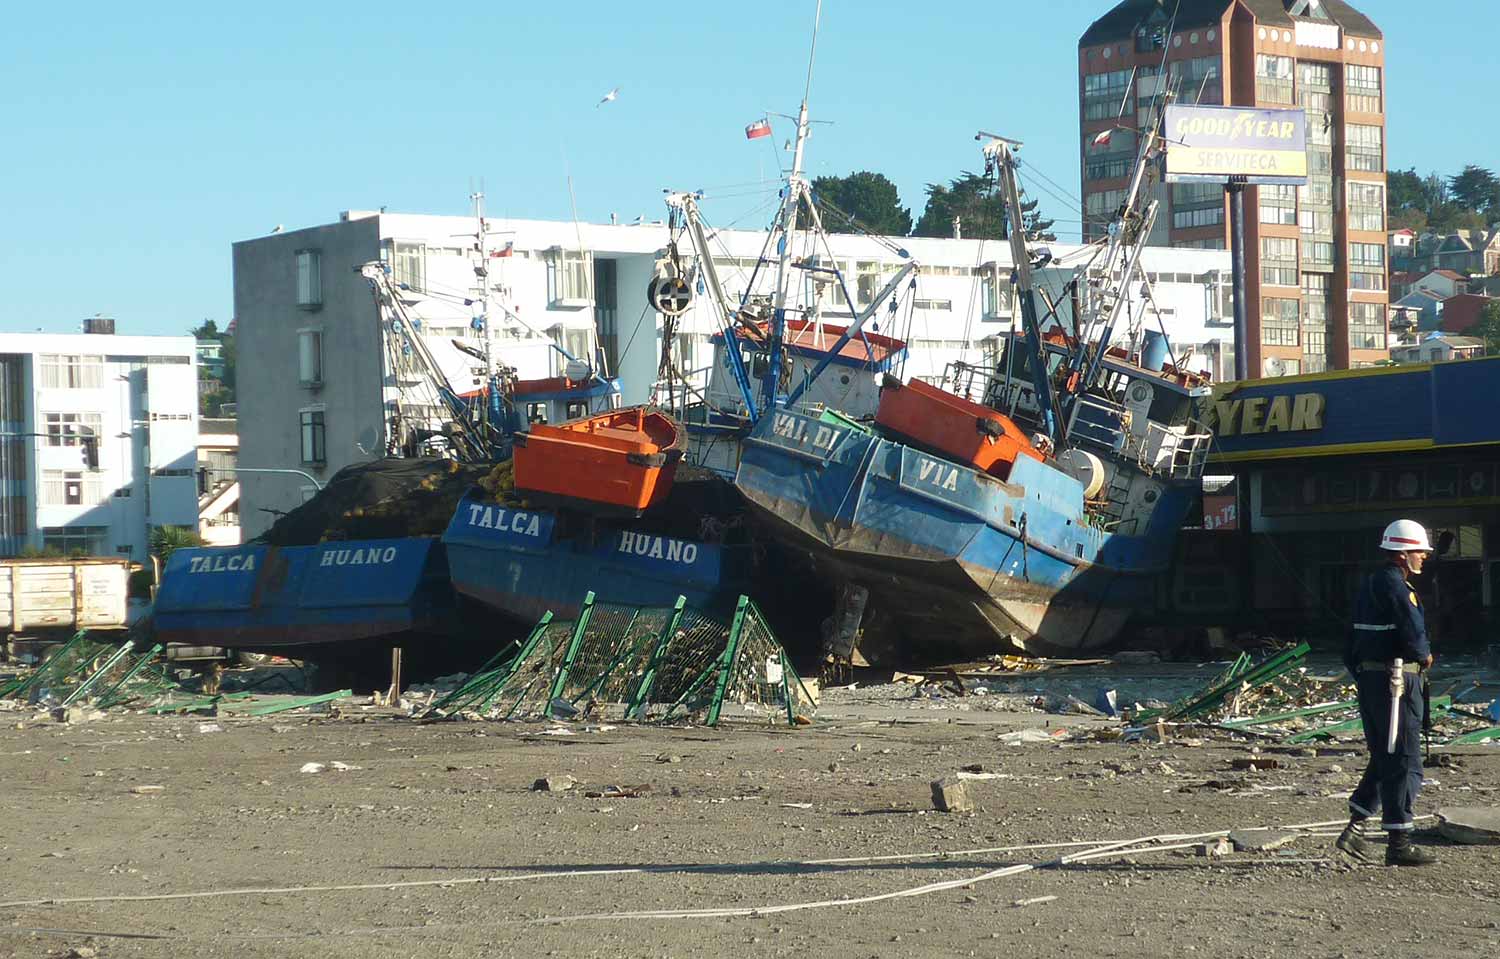 Tsunami aftermath in Talcahunao, Chile.